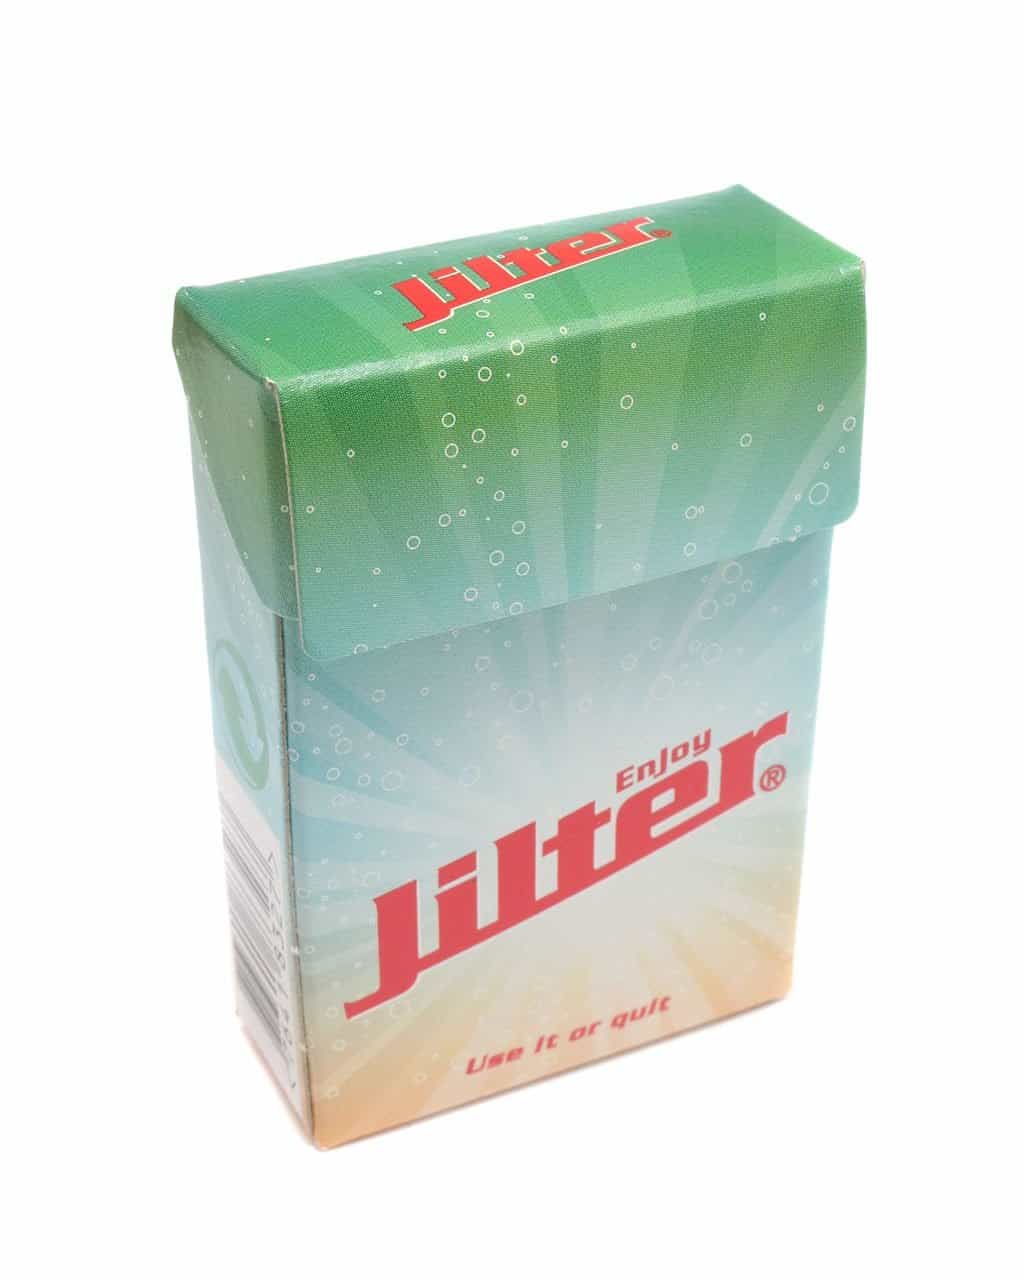 Filter &amp;aktivt kul JILTER cigaretfilter | 42 stk.